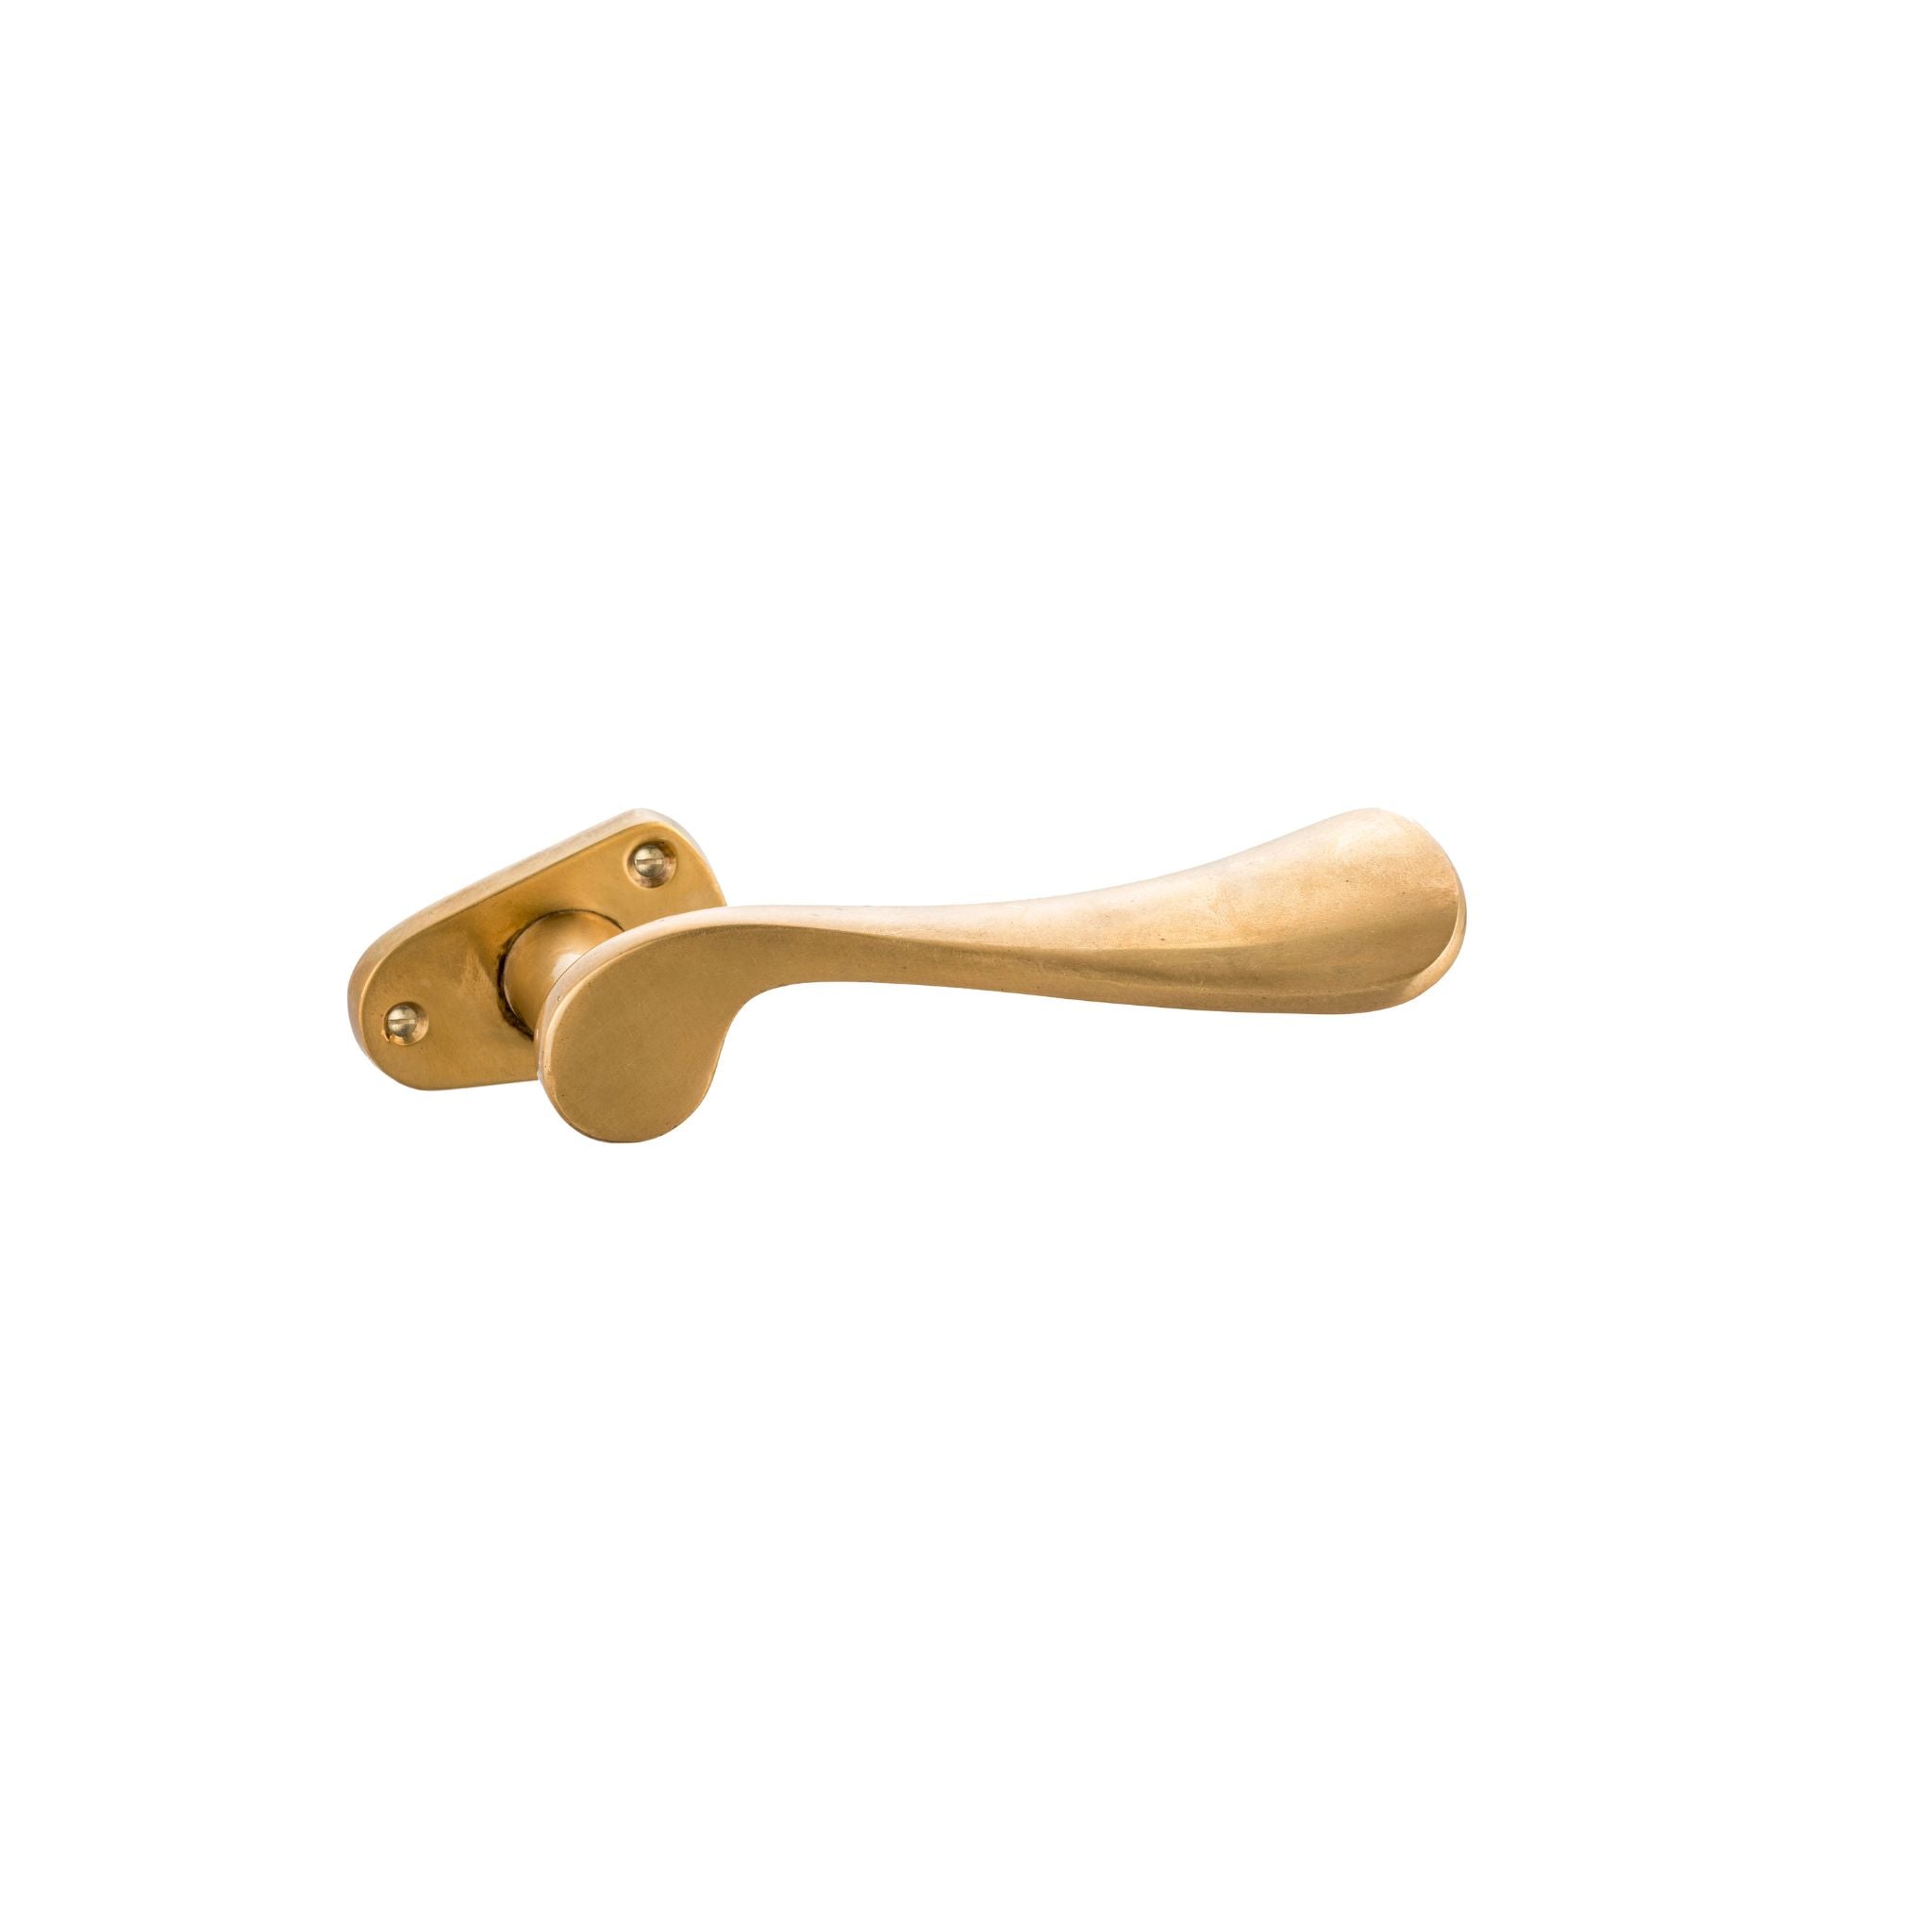 Novecento brass door handle with curves - ilbronzetto